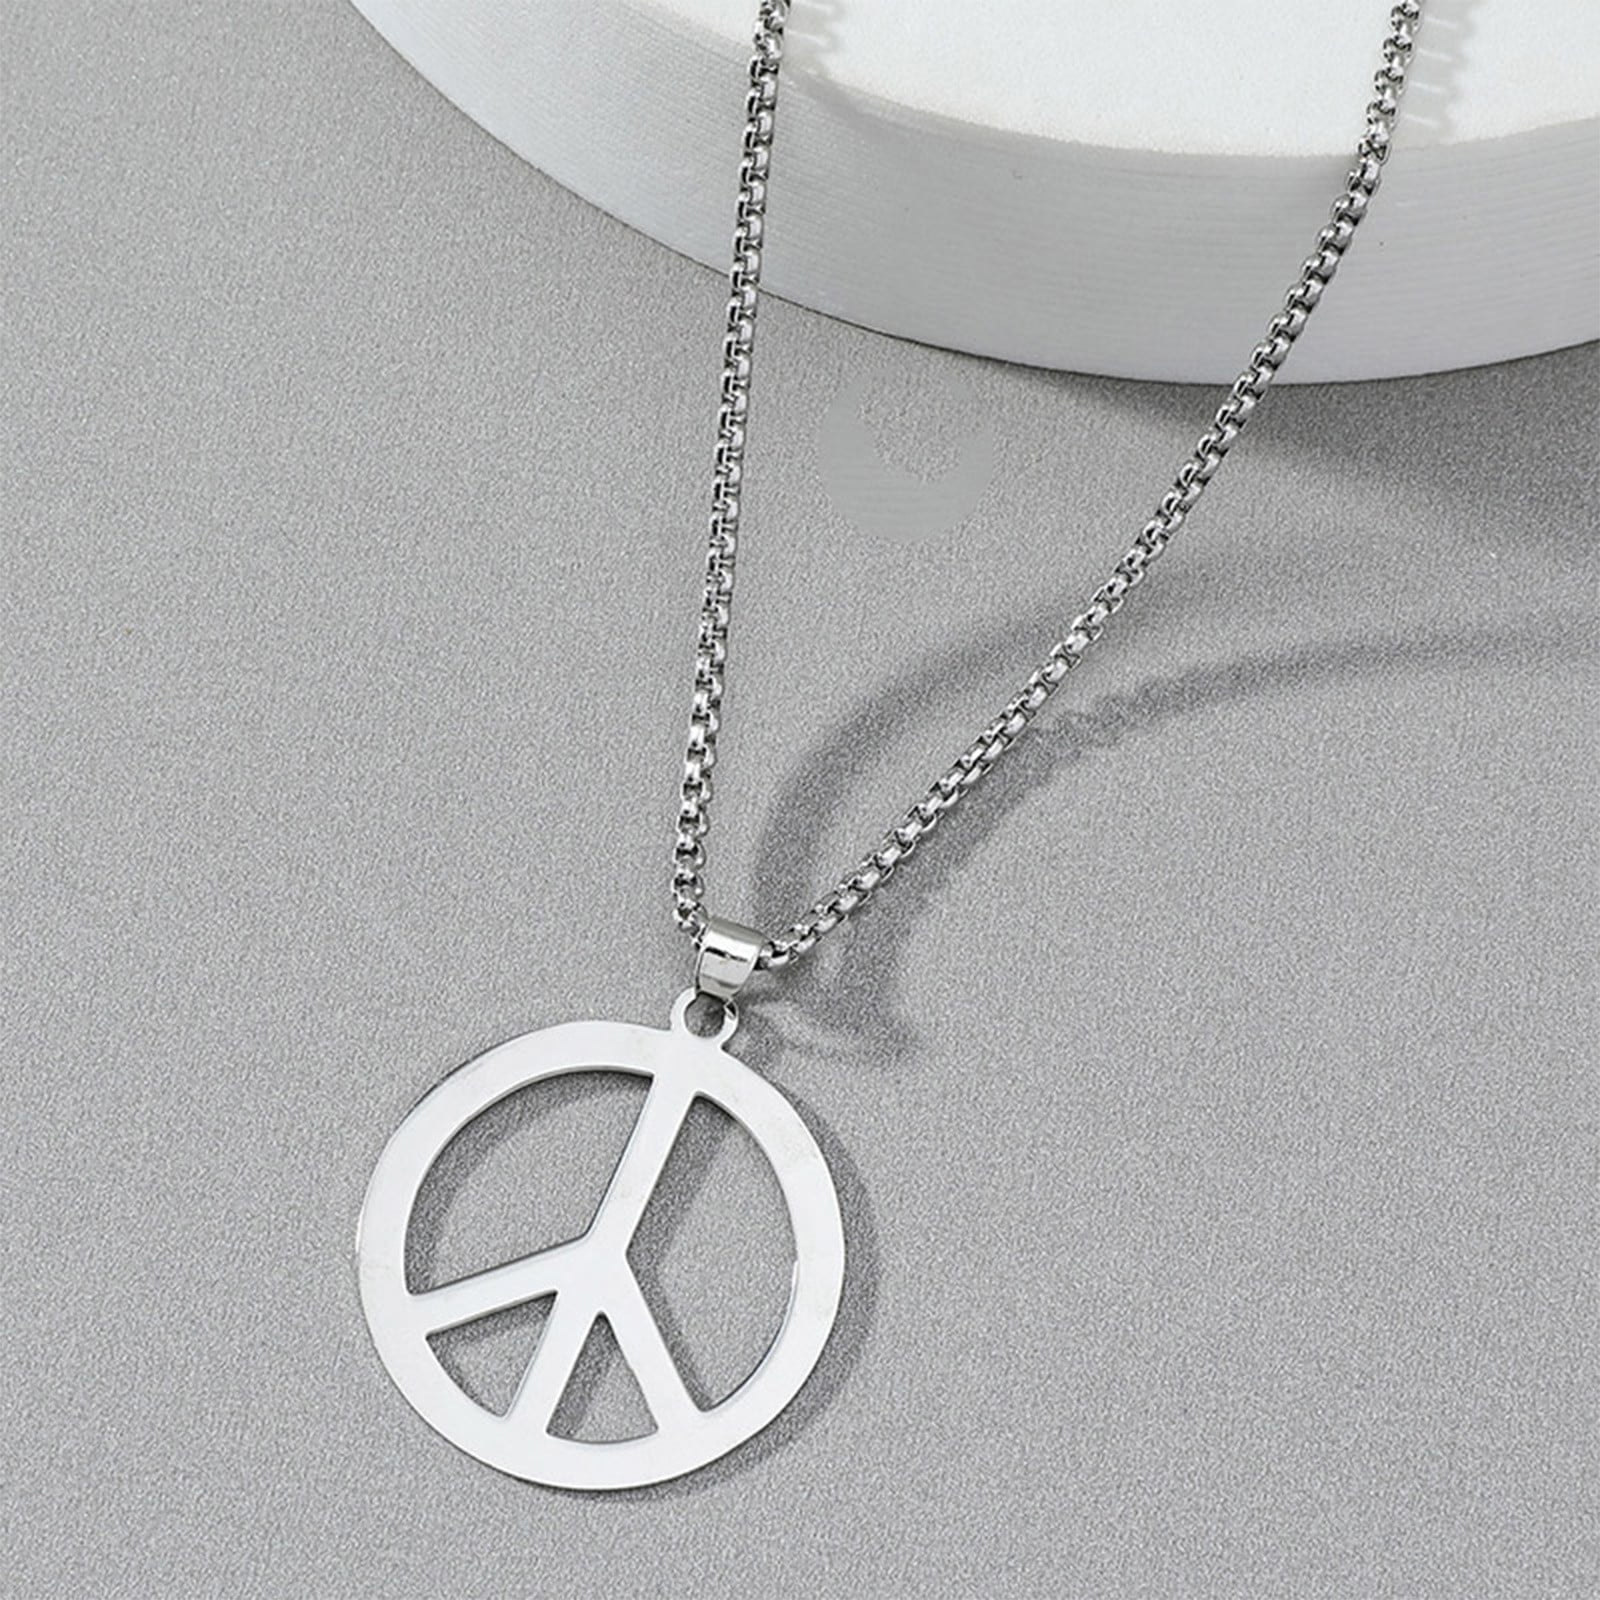 Silver Woodstock Hippy Hippie Retro Peace Pendant Black Leather Surfer Necklace 